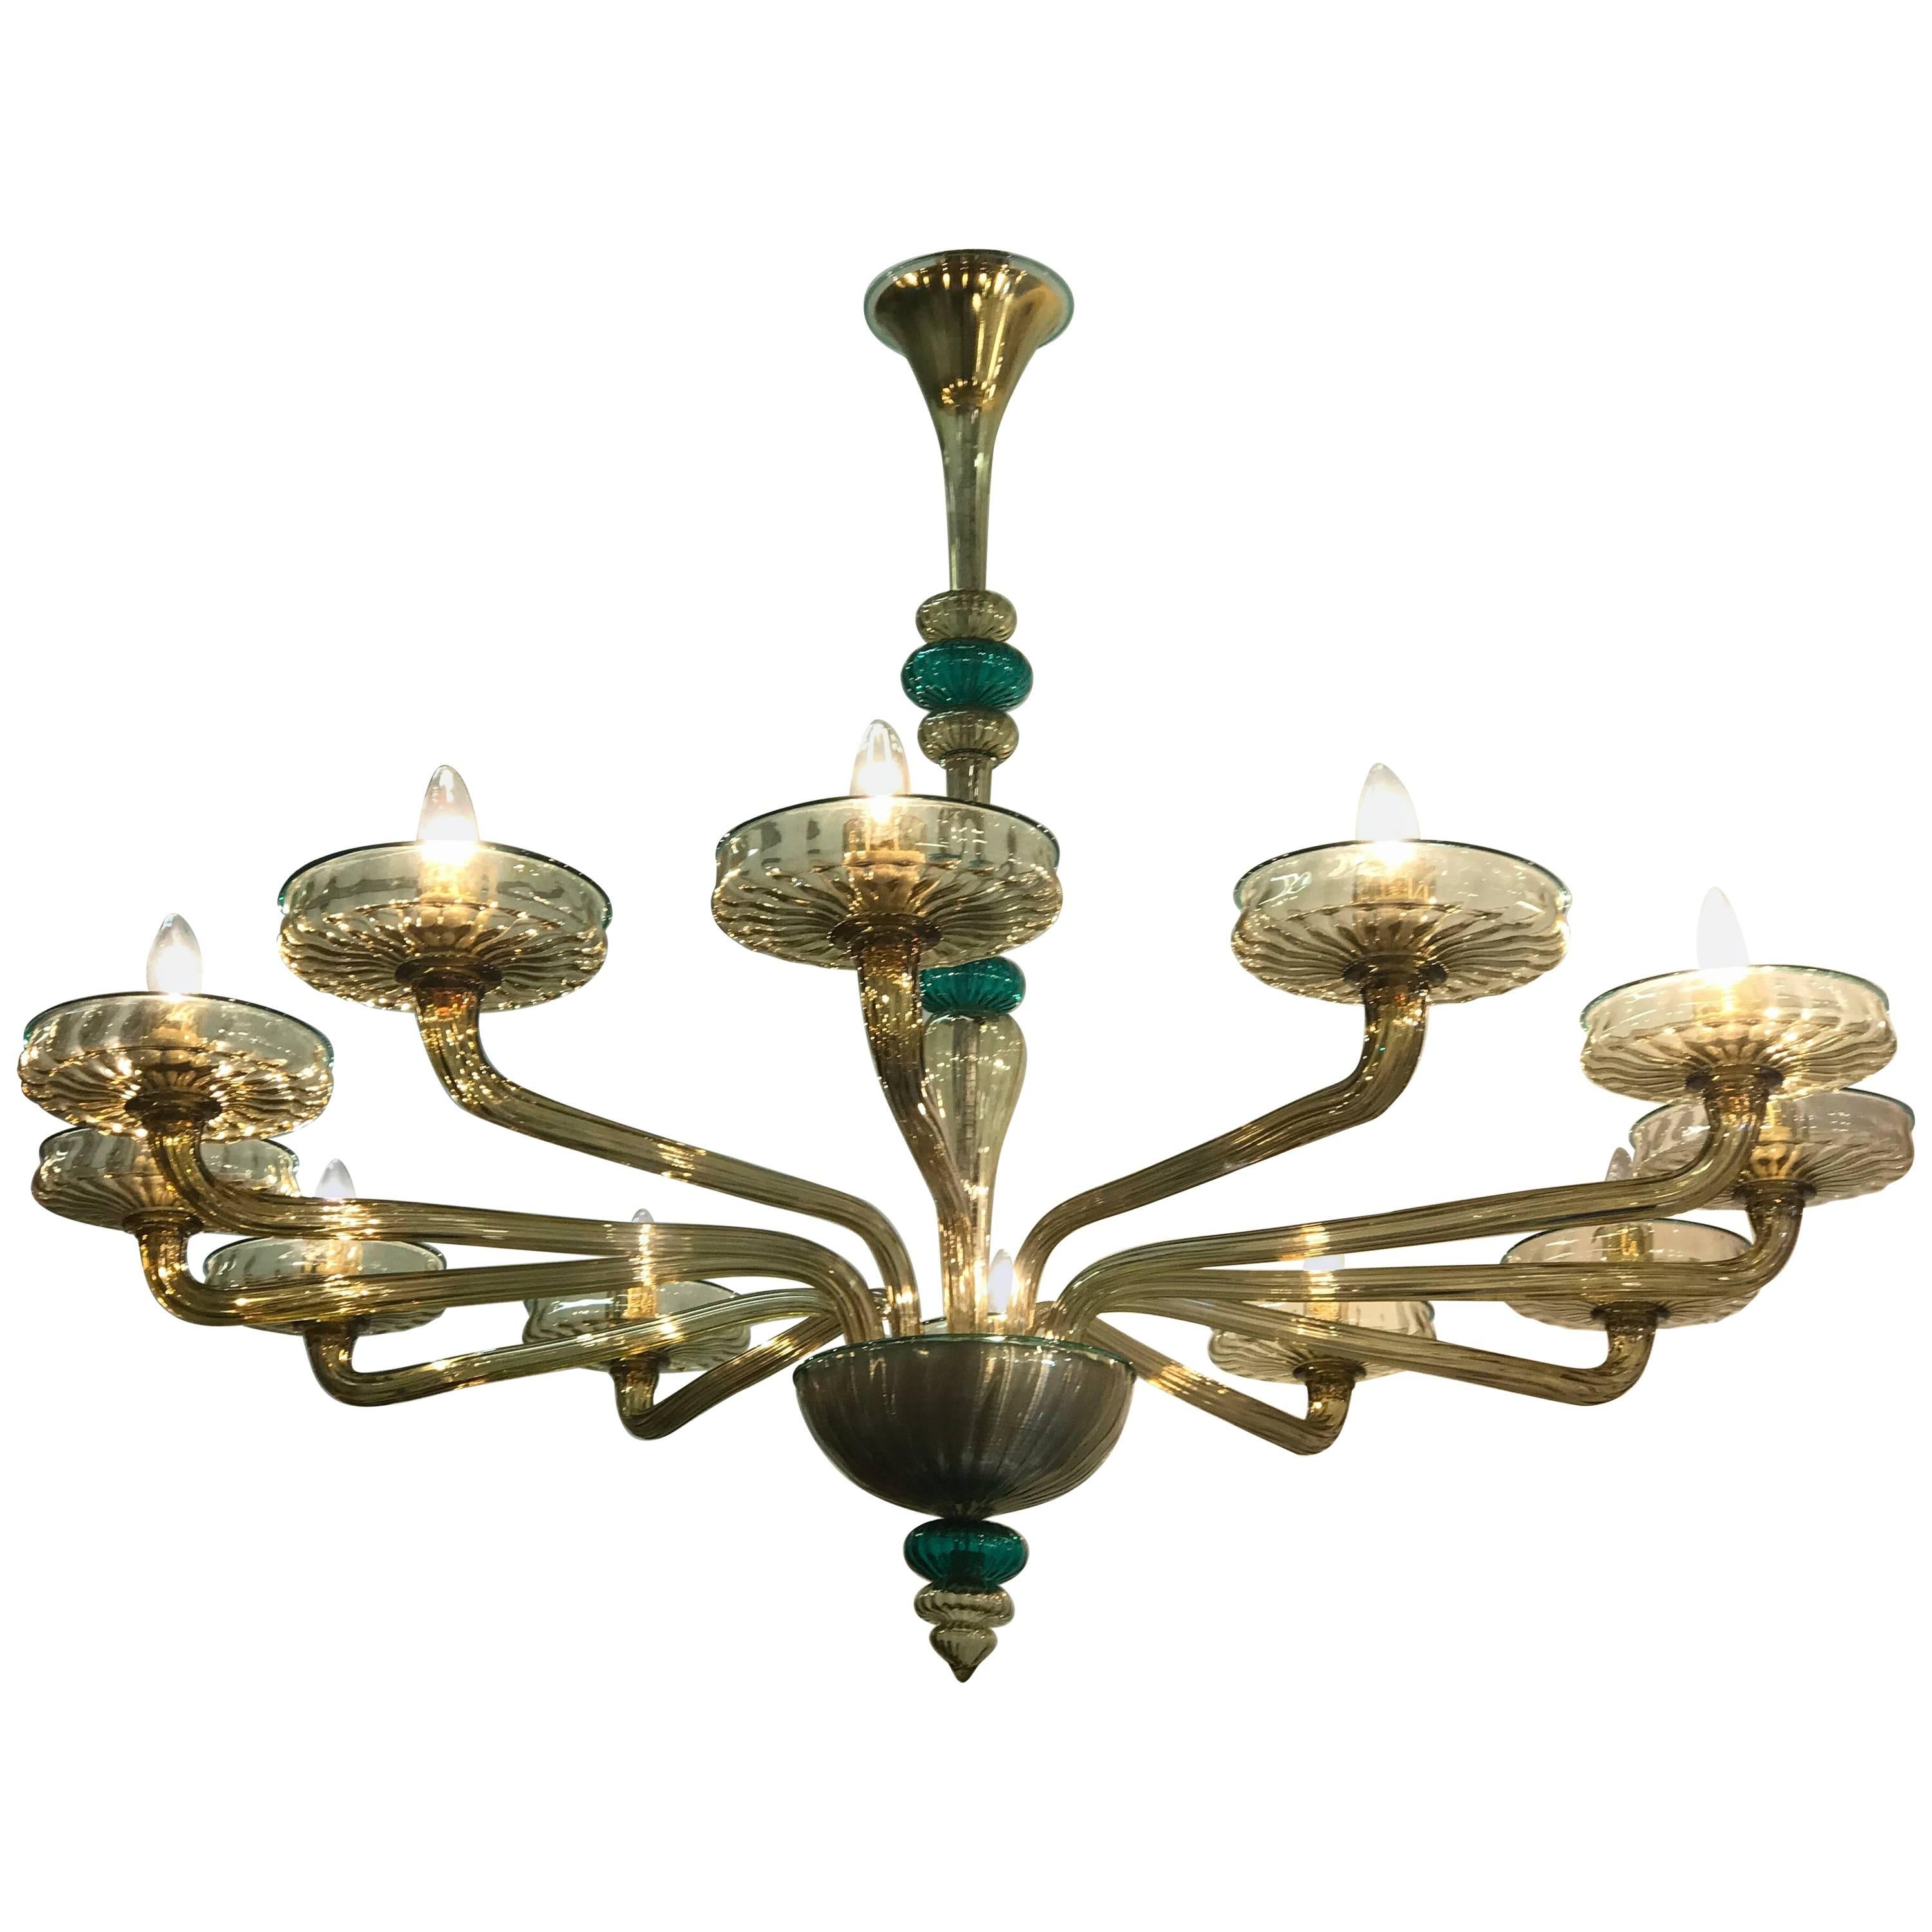 This magnificent chandelier features 12 arms. Excellent vintage condition.